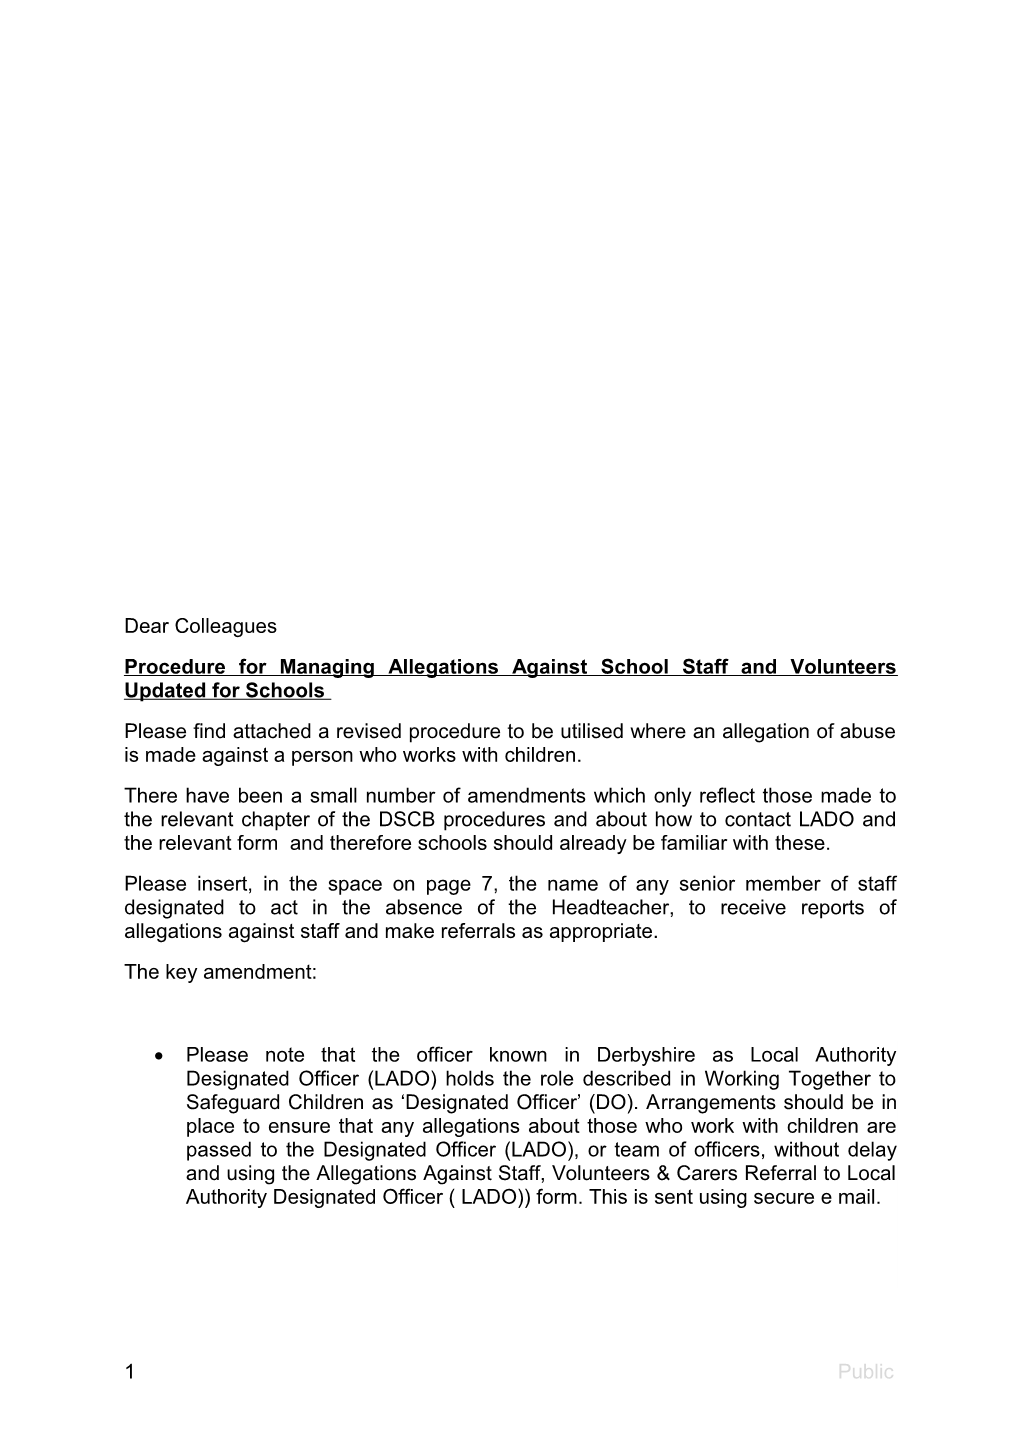 Procedure for Managing Allegations Againstschool Staff and Volunteers Updated for Schools